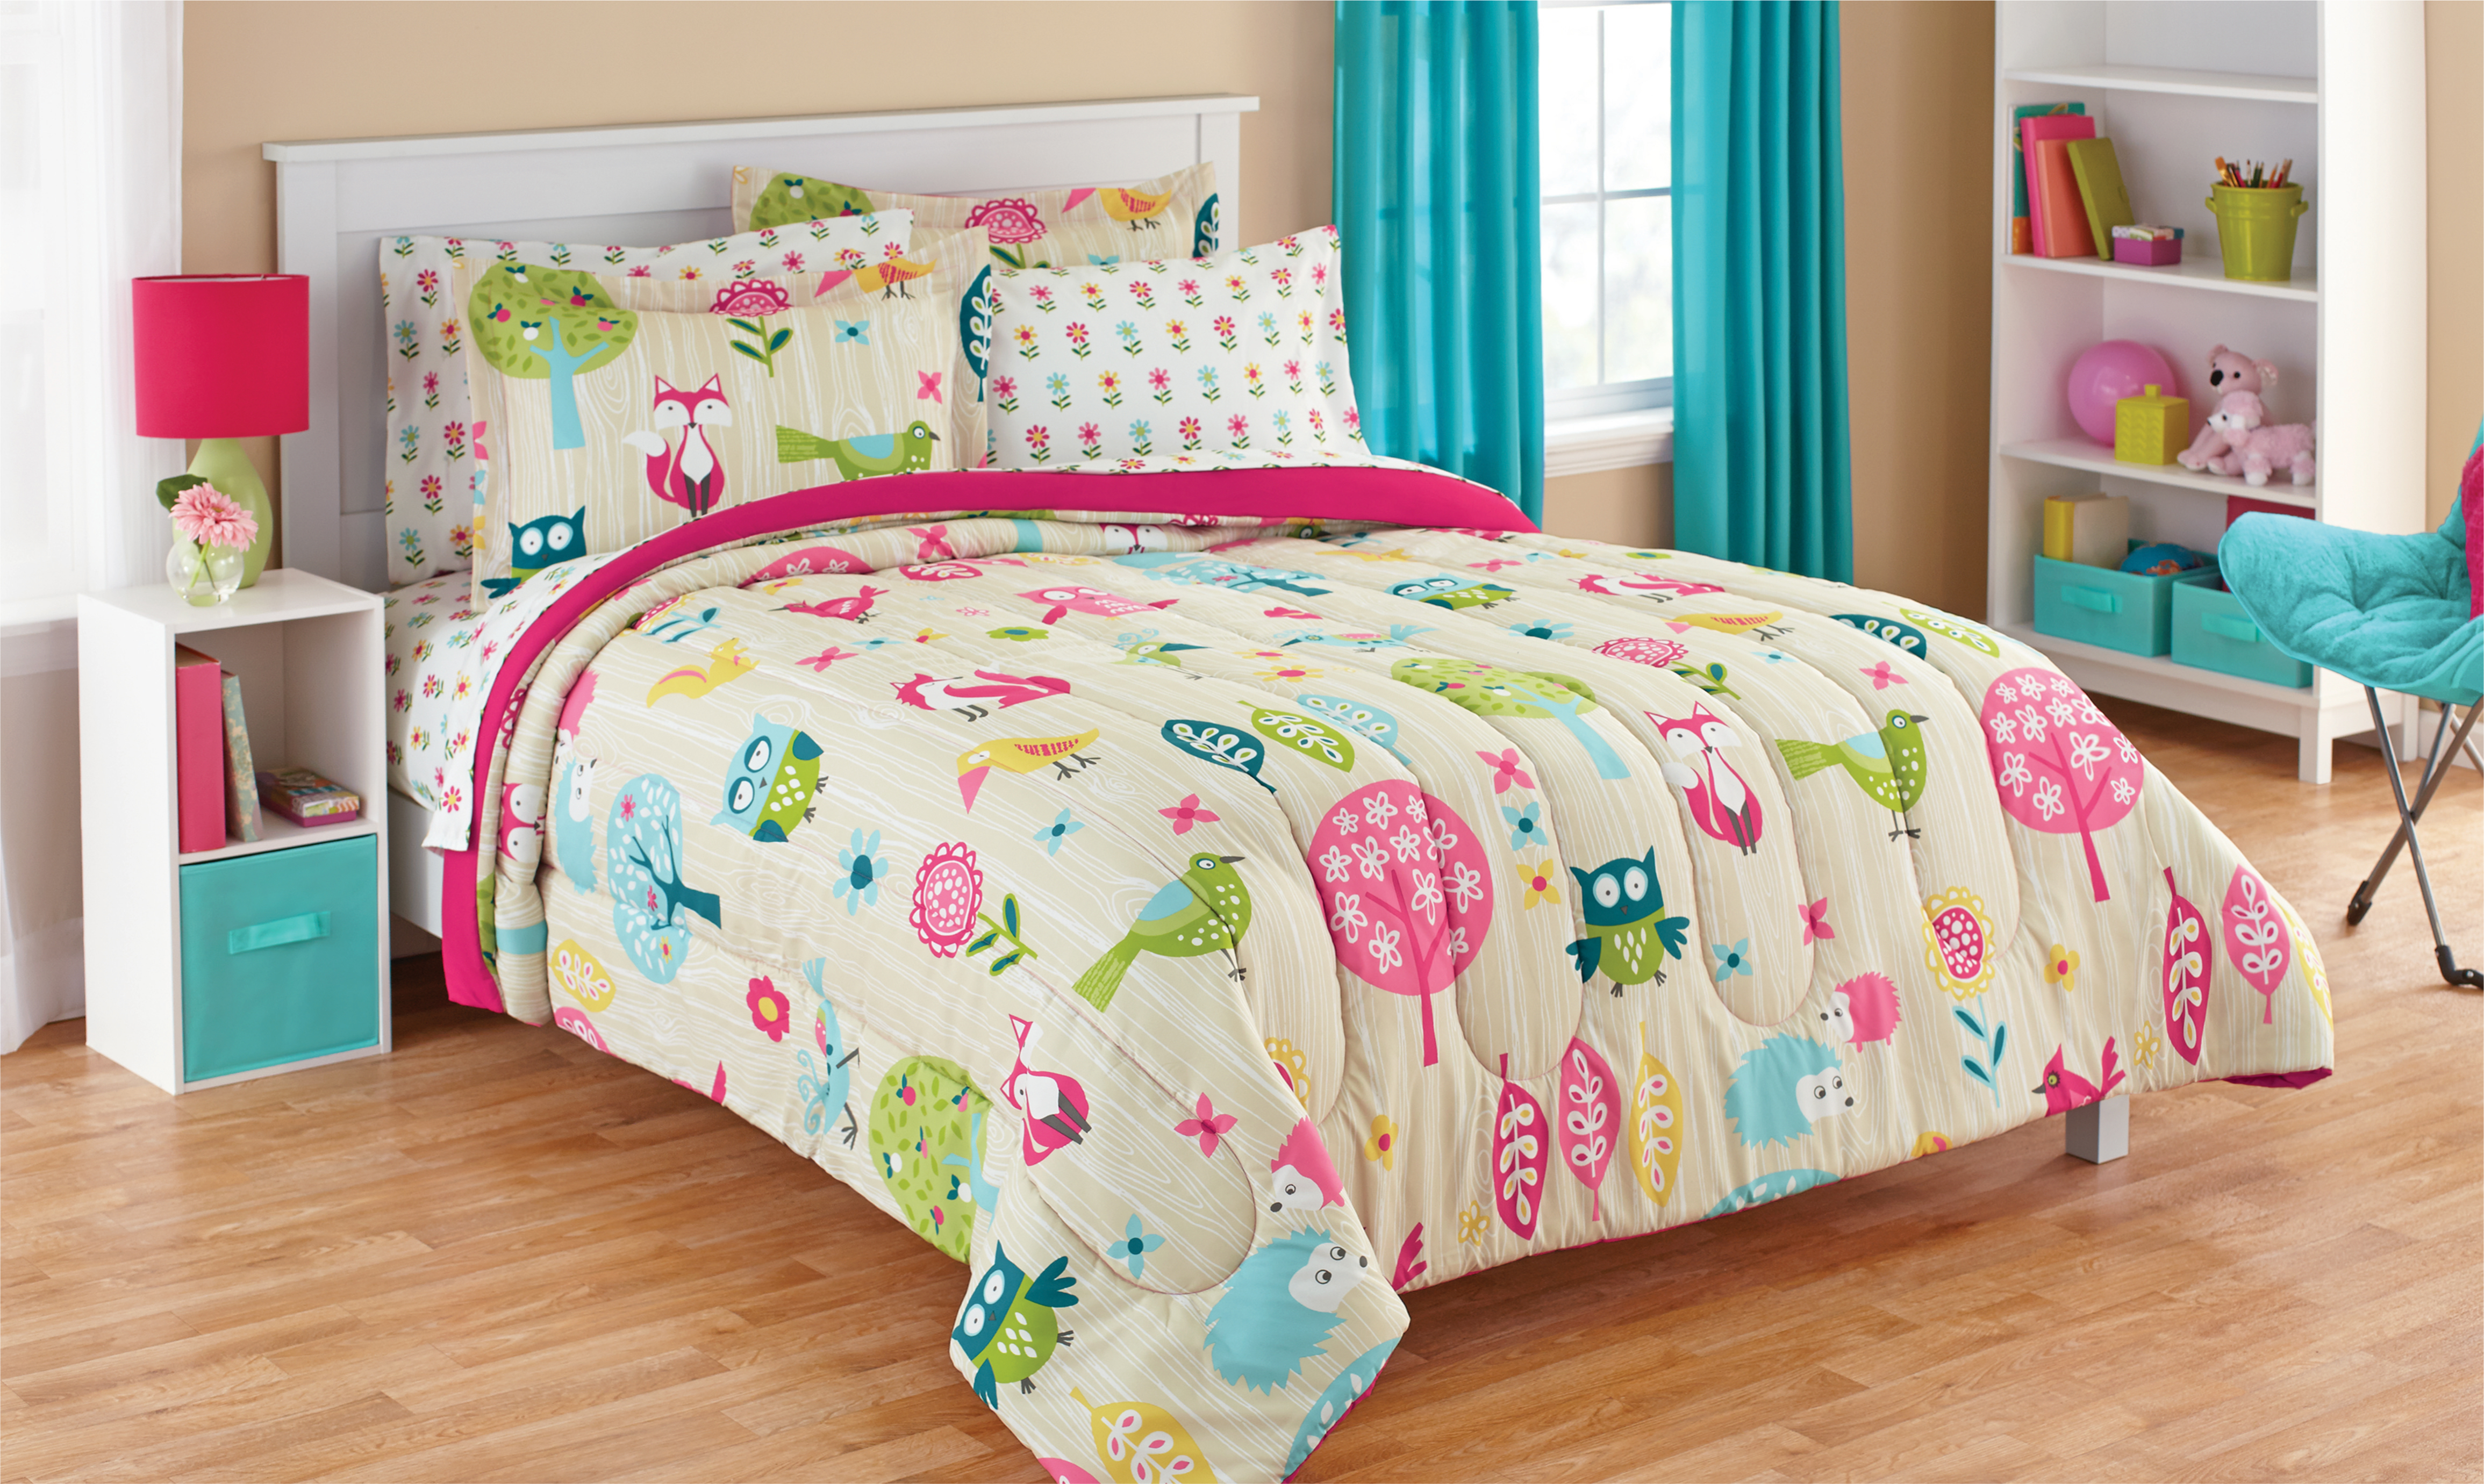 Elegant Home Cute Beautiful Girls Mutlicolor Pink Blue Green Orange Owl Design 2 Piece Coverlet Bedspread Quilt for Kids Teens//Girls Twin Size # K18-03